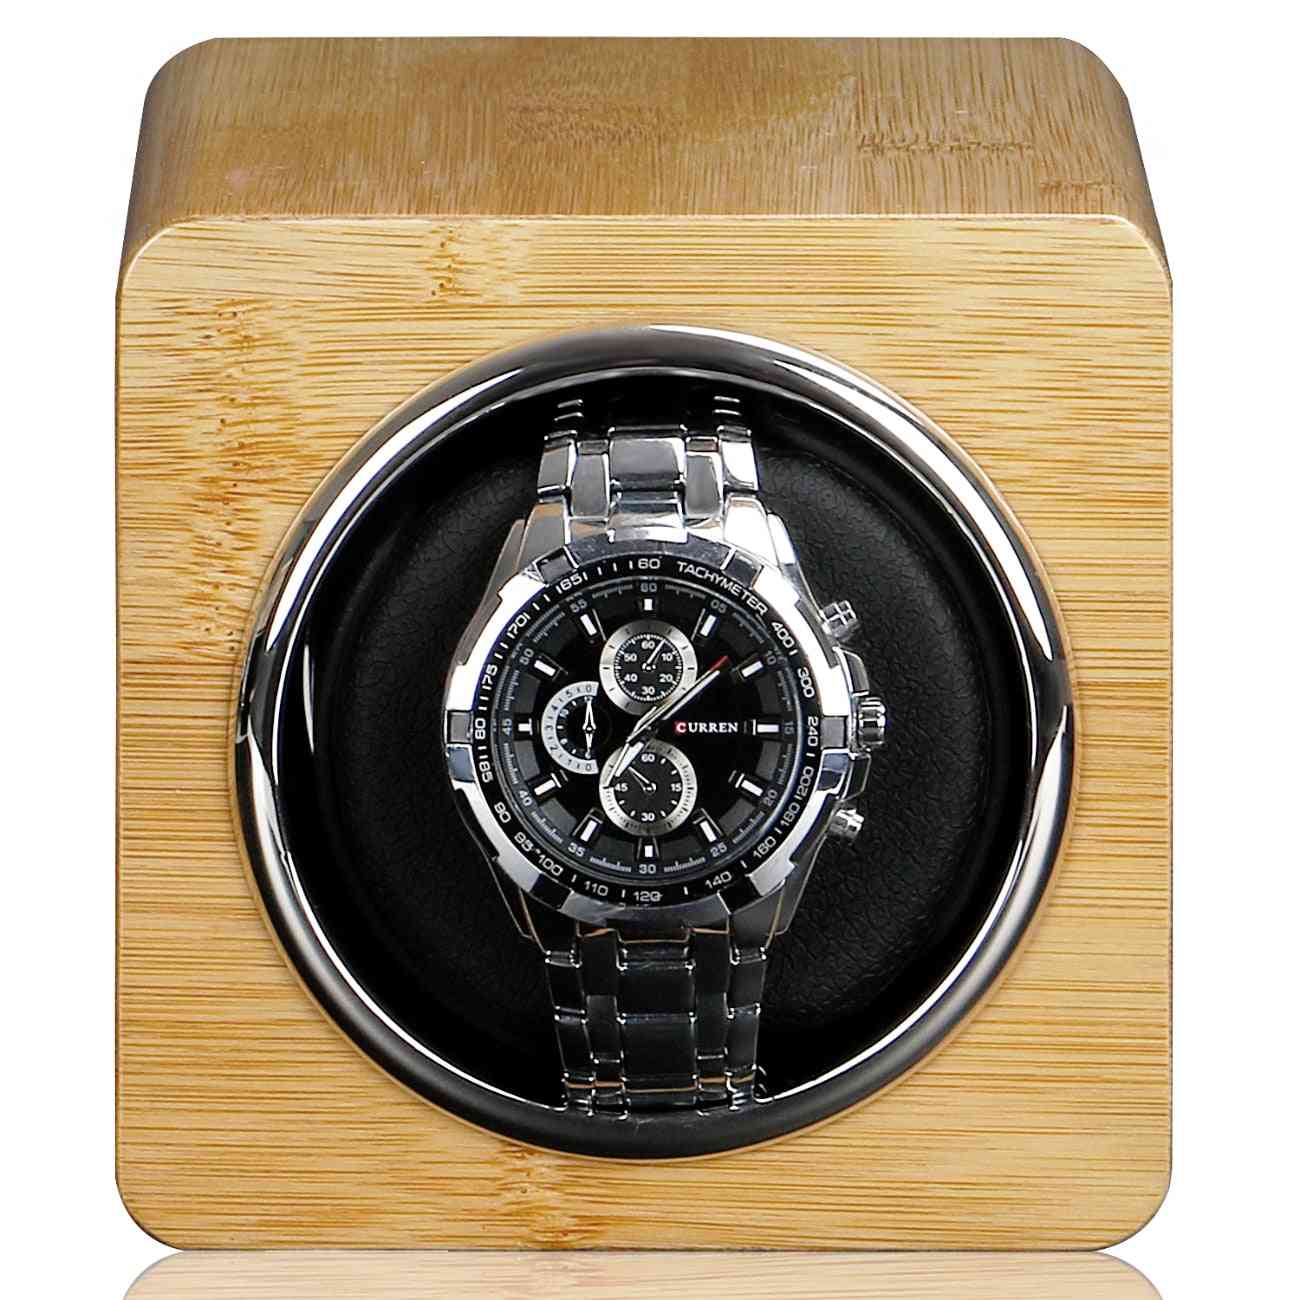 Box na navíječe hodinek, mechanický displej s otočným koženým pouzdrem